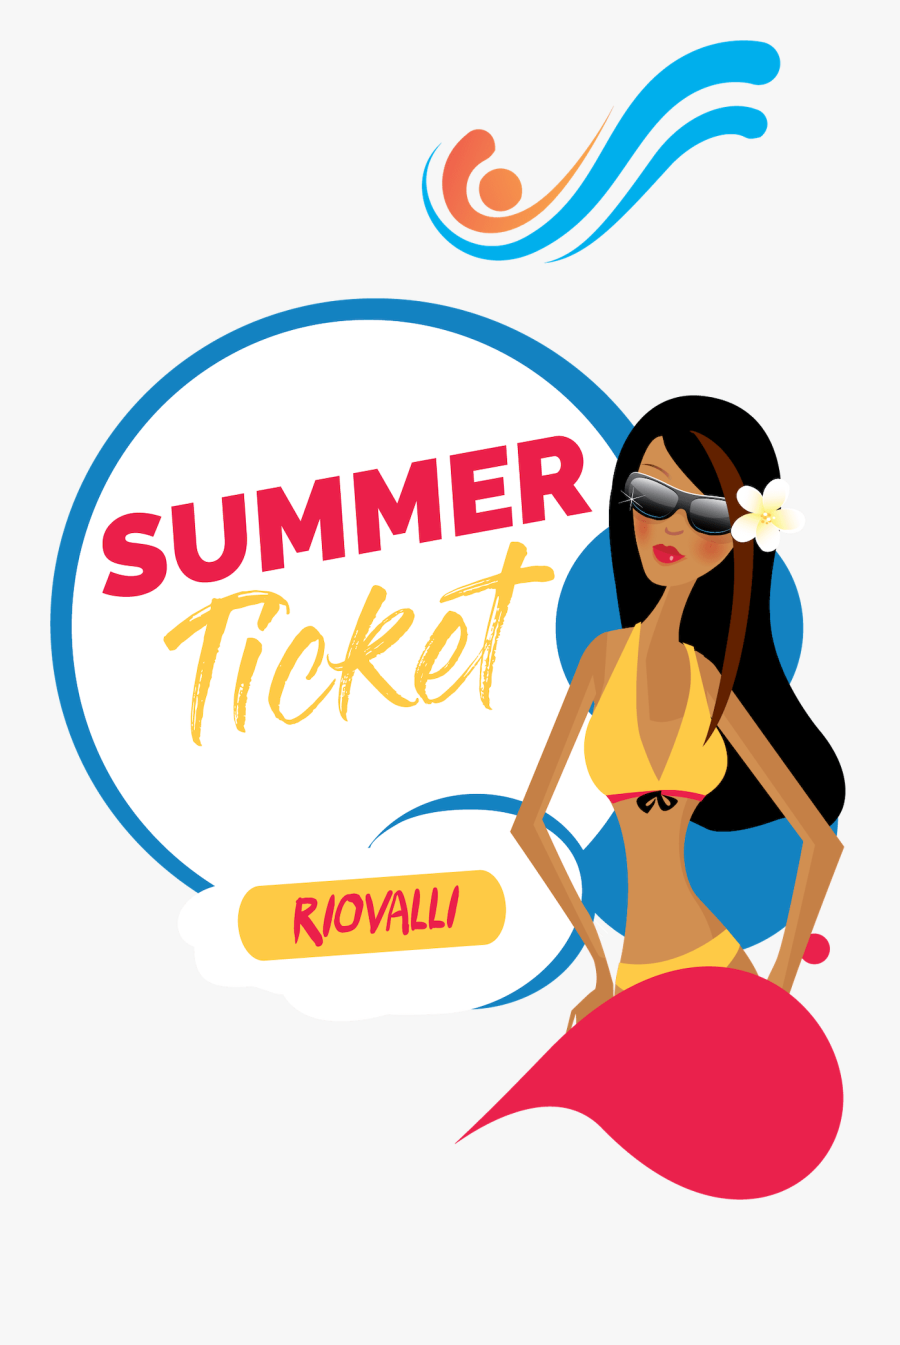 Summer Ticket , Transparent Cartoons, Transparent Clipart